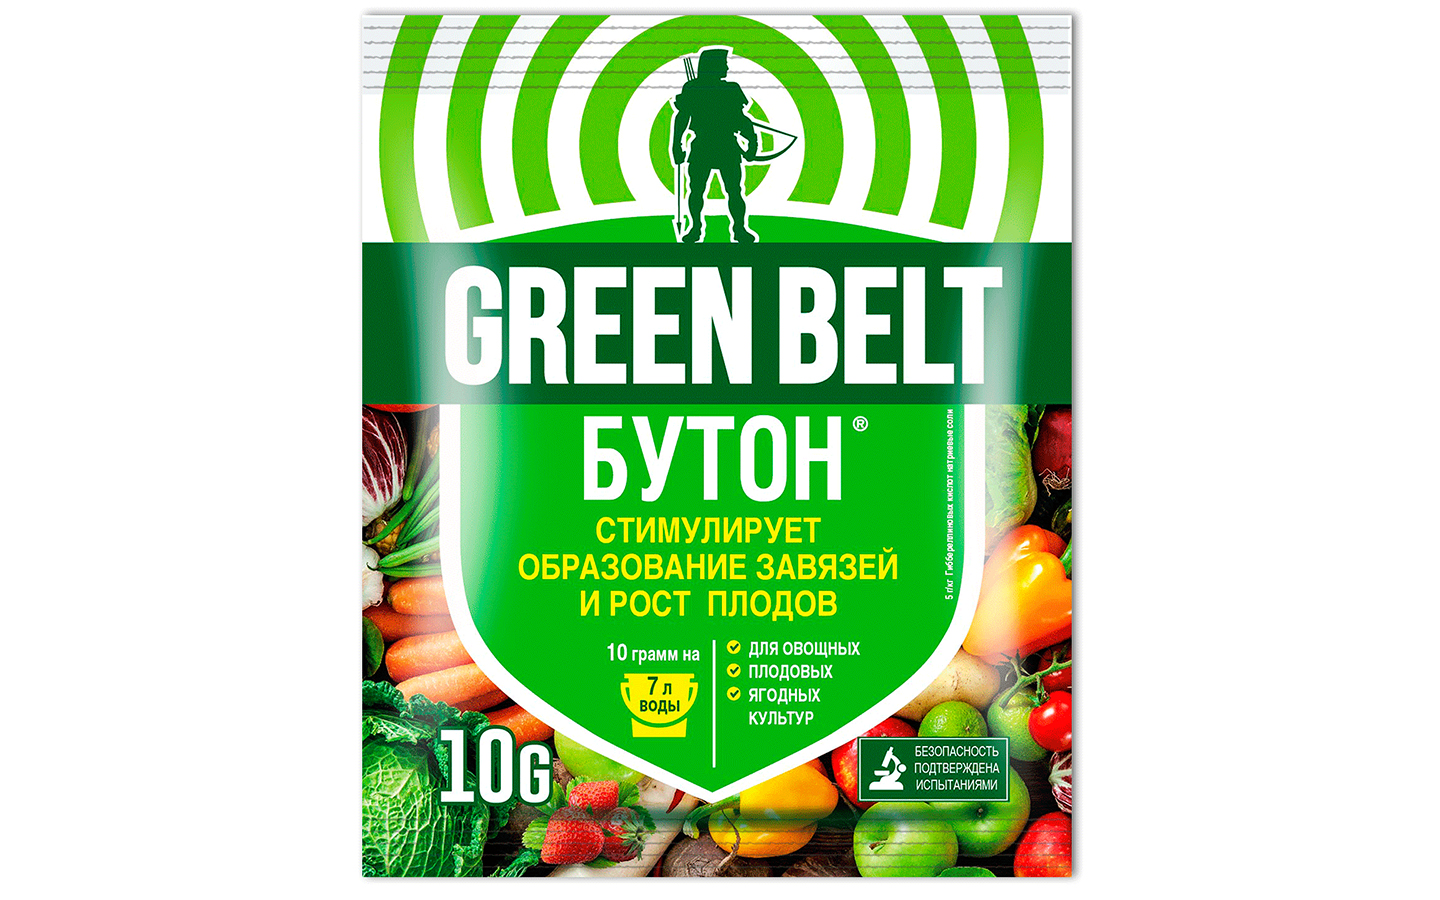 GREEN BELT Бутон, пакет 10 гр, 01-156